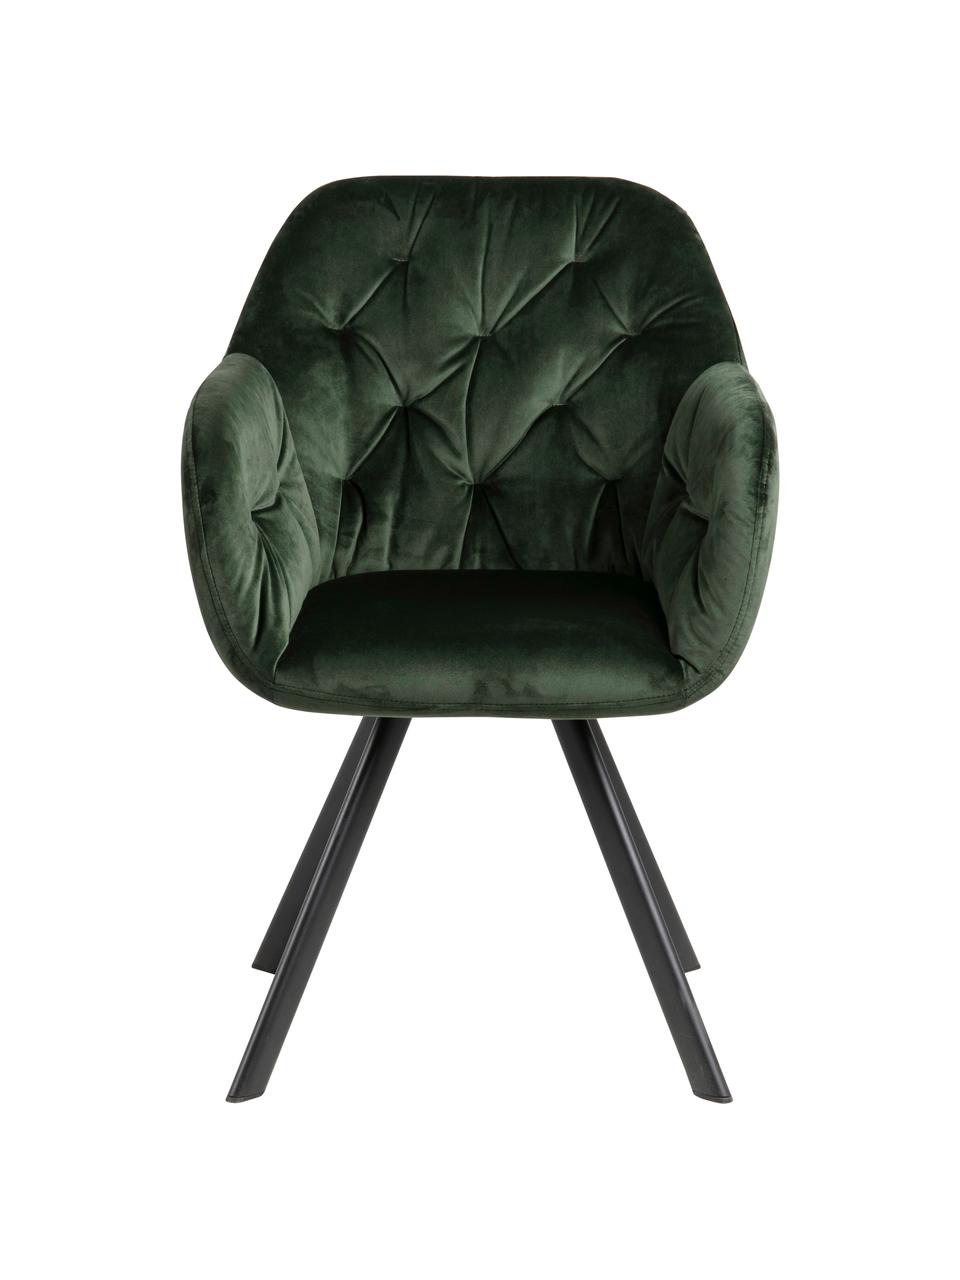 Chaise pivotante velours vert forêt Lucie, Vert forêt, noir, larg. 58 x prof. 62 cm